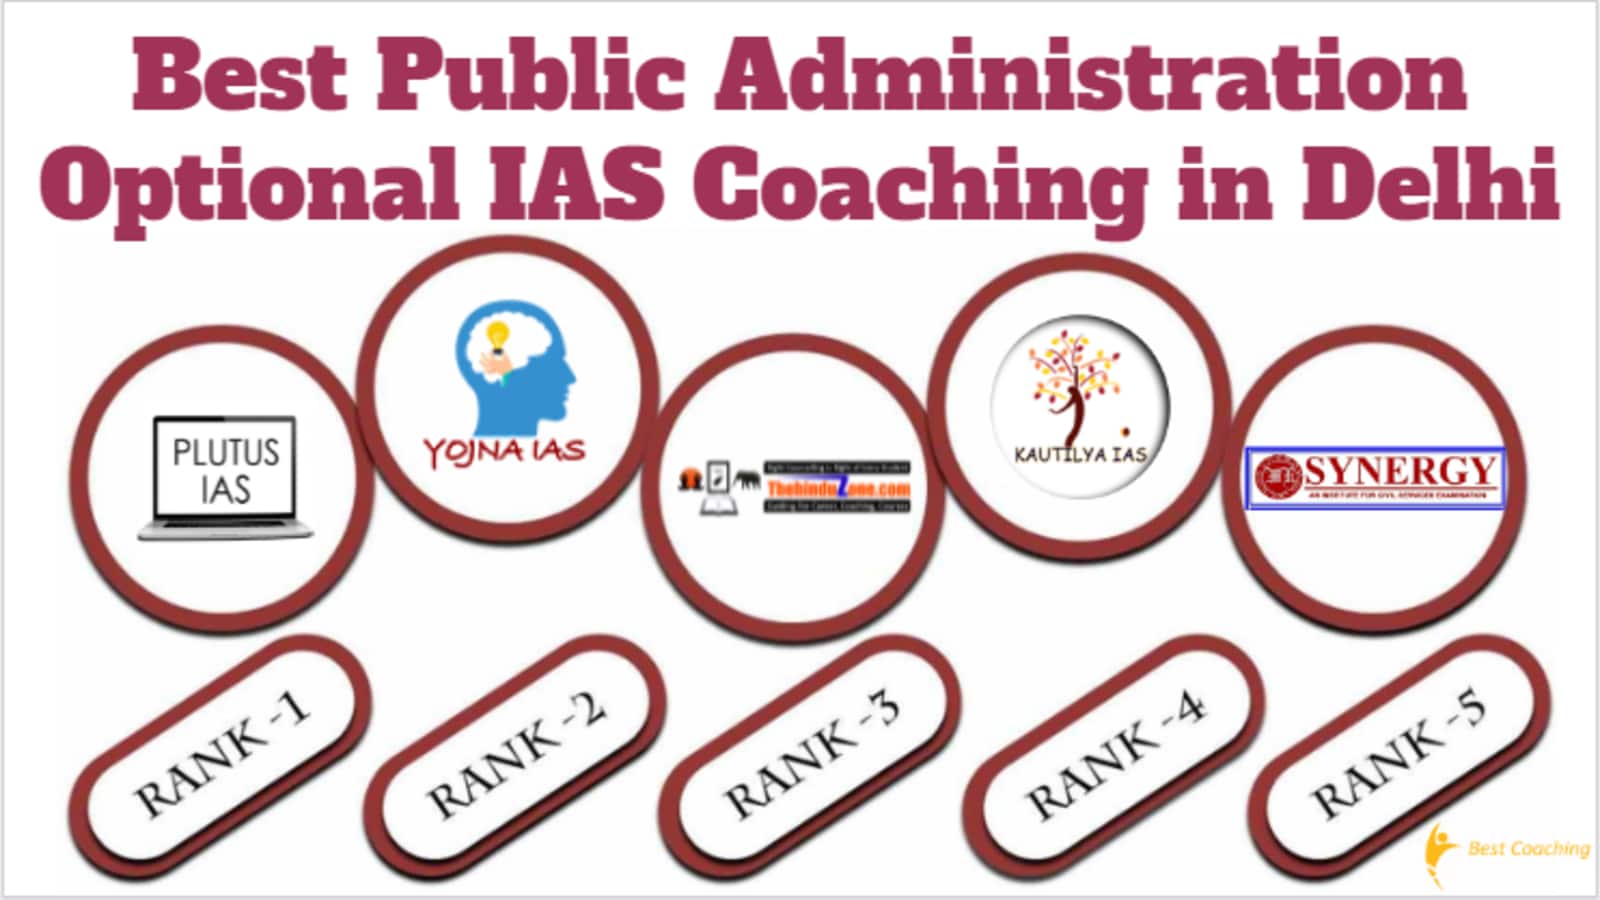 Top Public Administration Optional IAS Coaching in Delhi